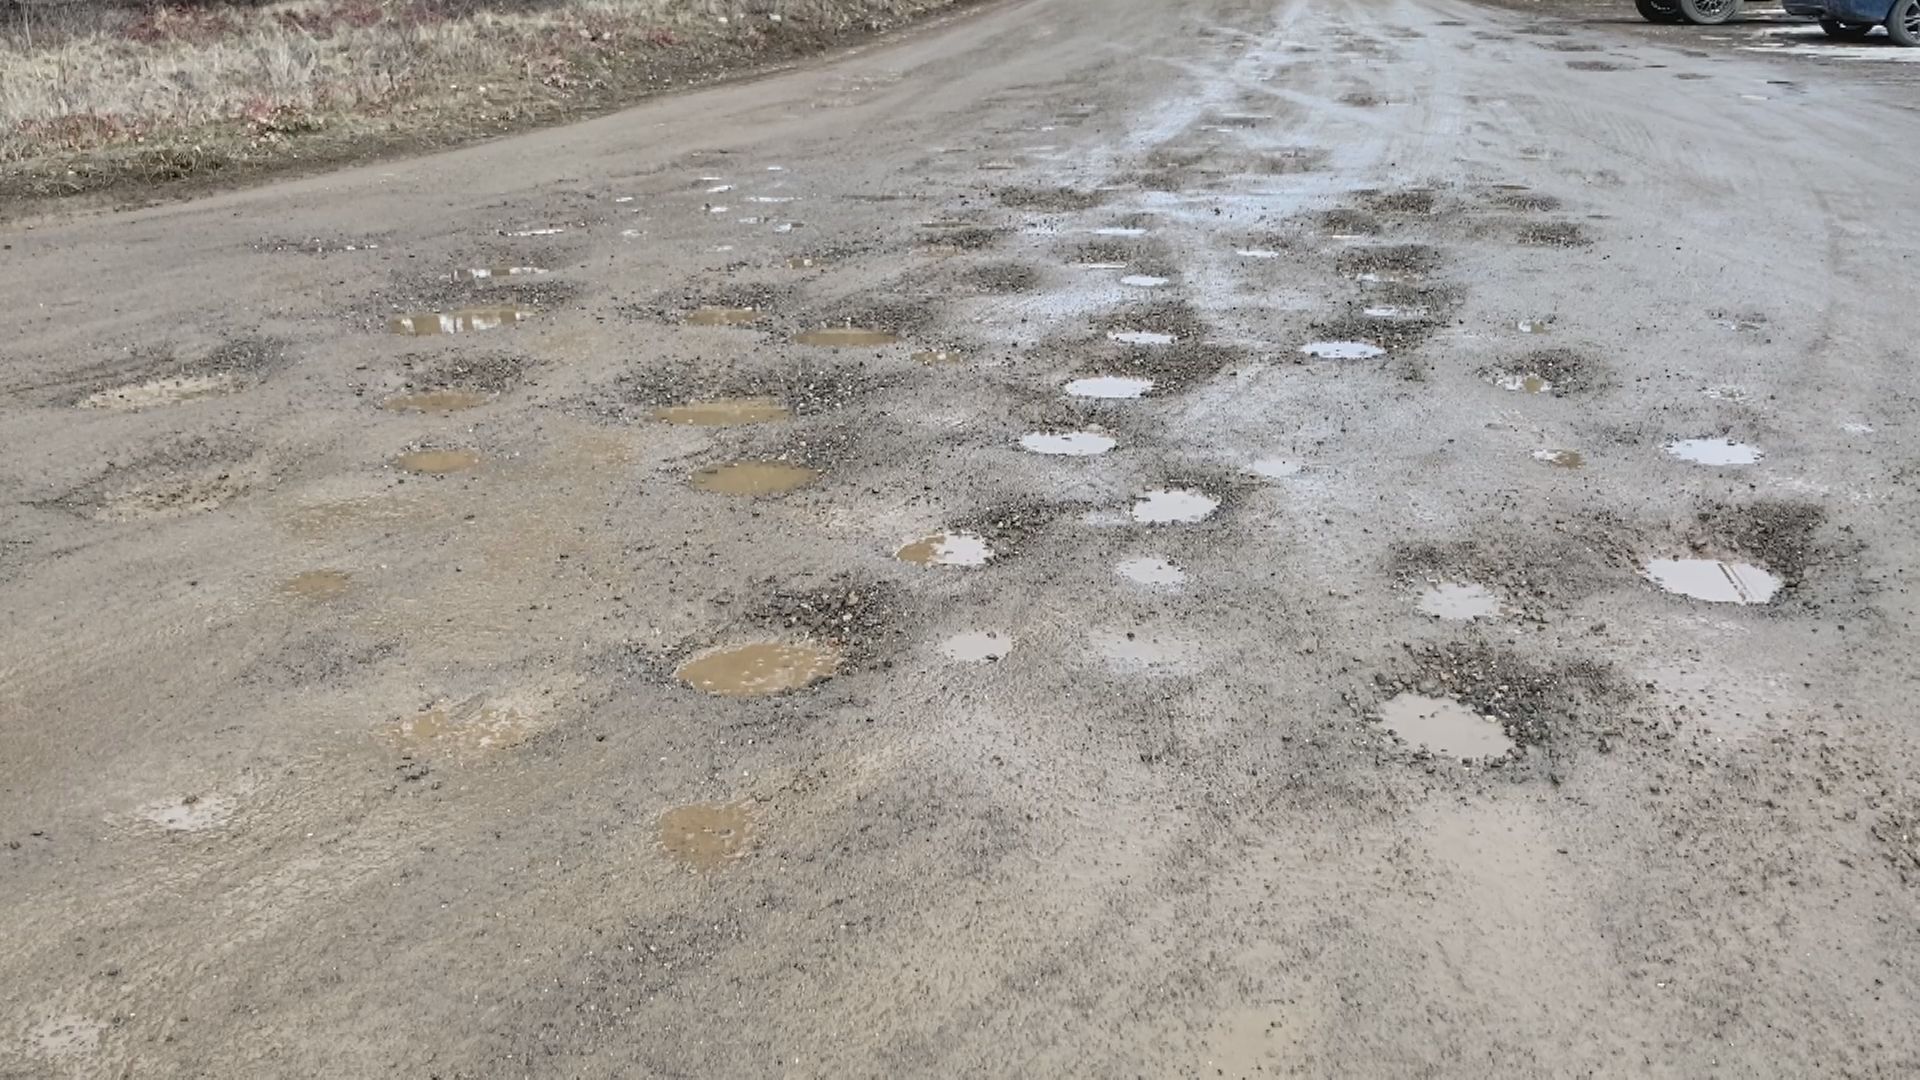 Rough roads causing concerns in Okanagan community